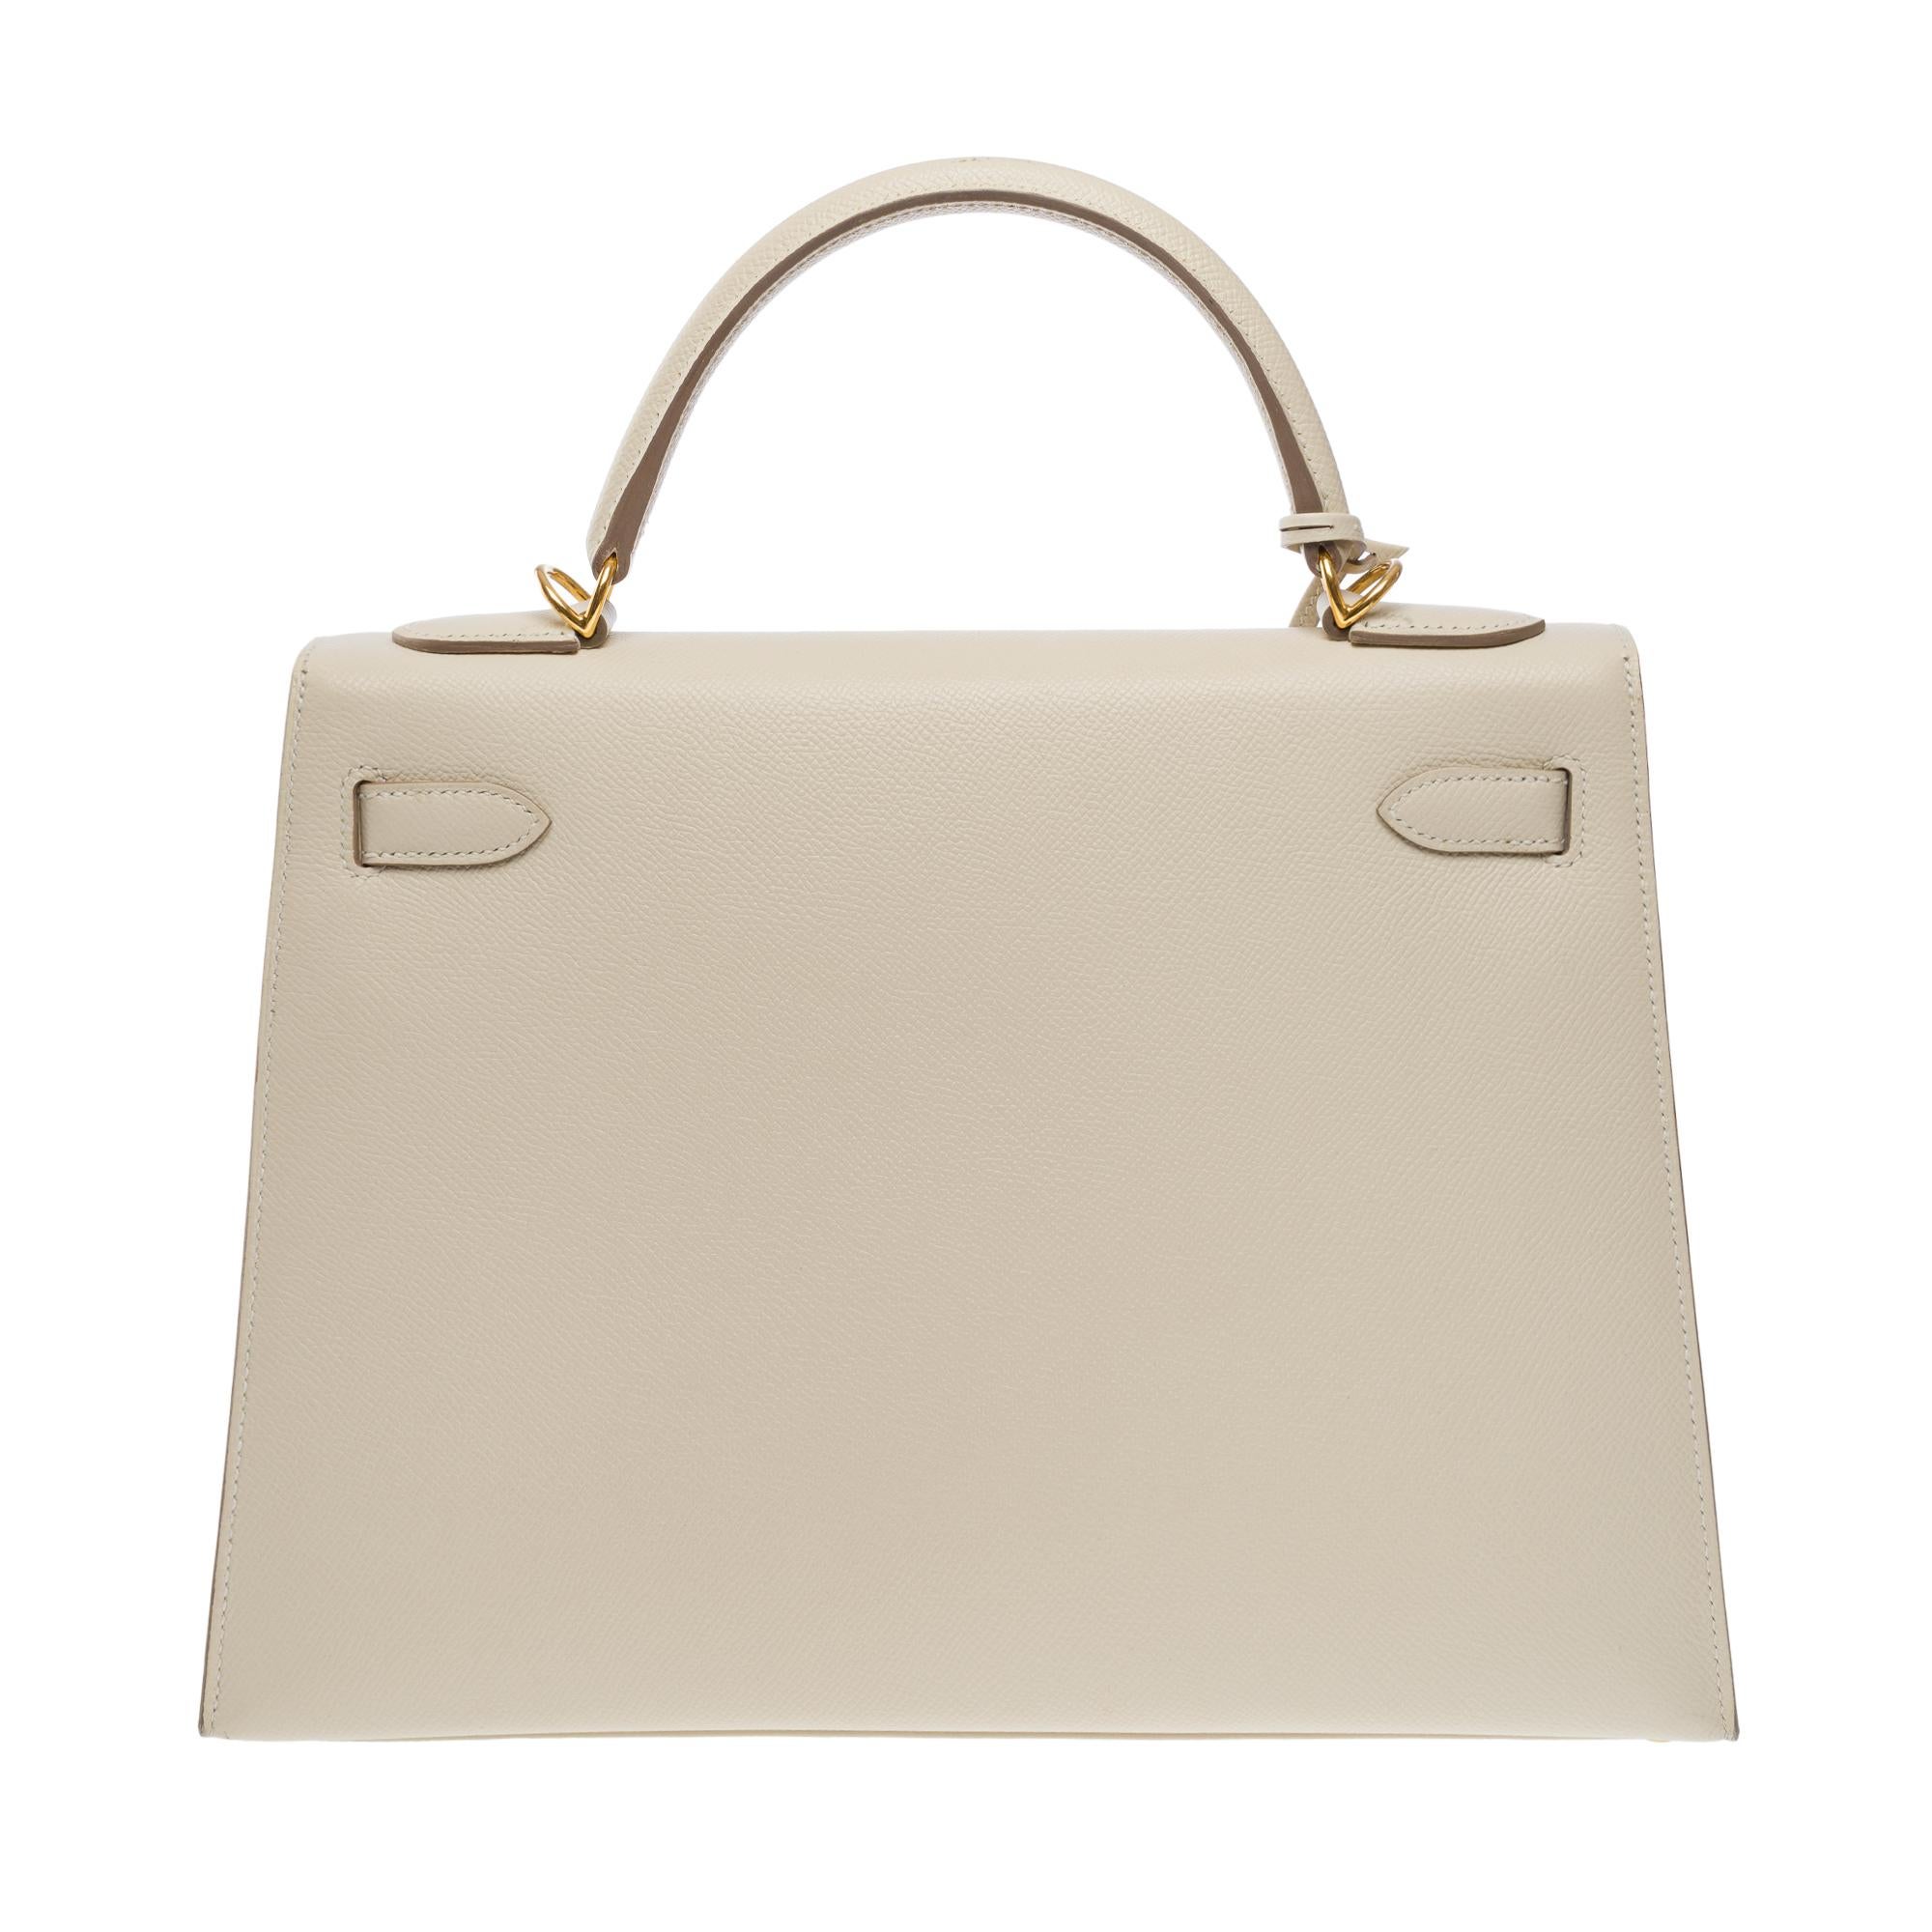 Women's Stunning Hermès Kelly 32 sellier handbag strap in Craie epsom leather, GHW